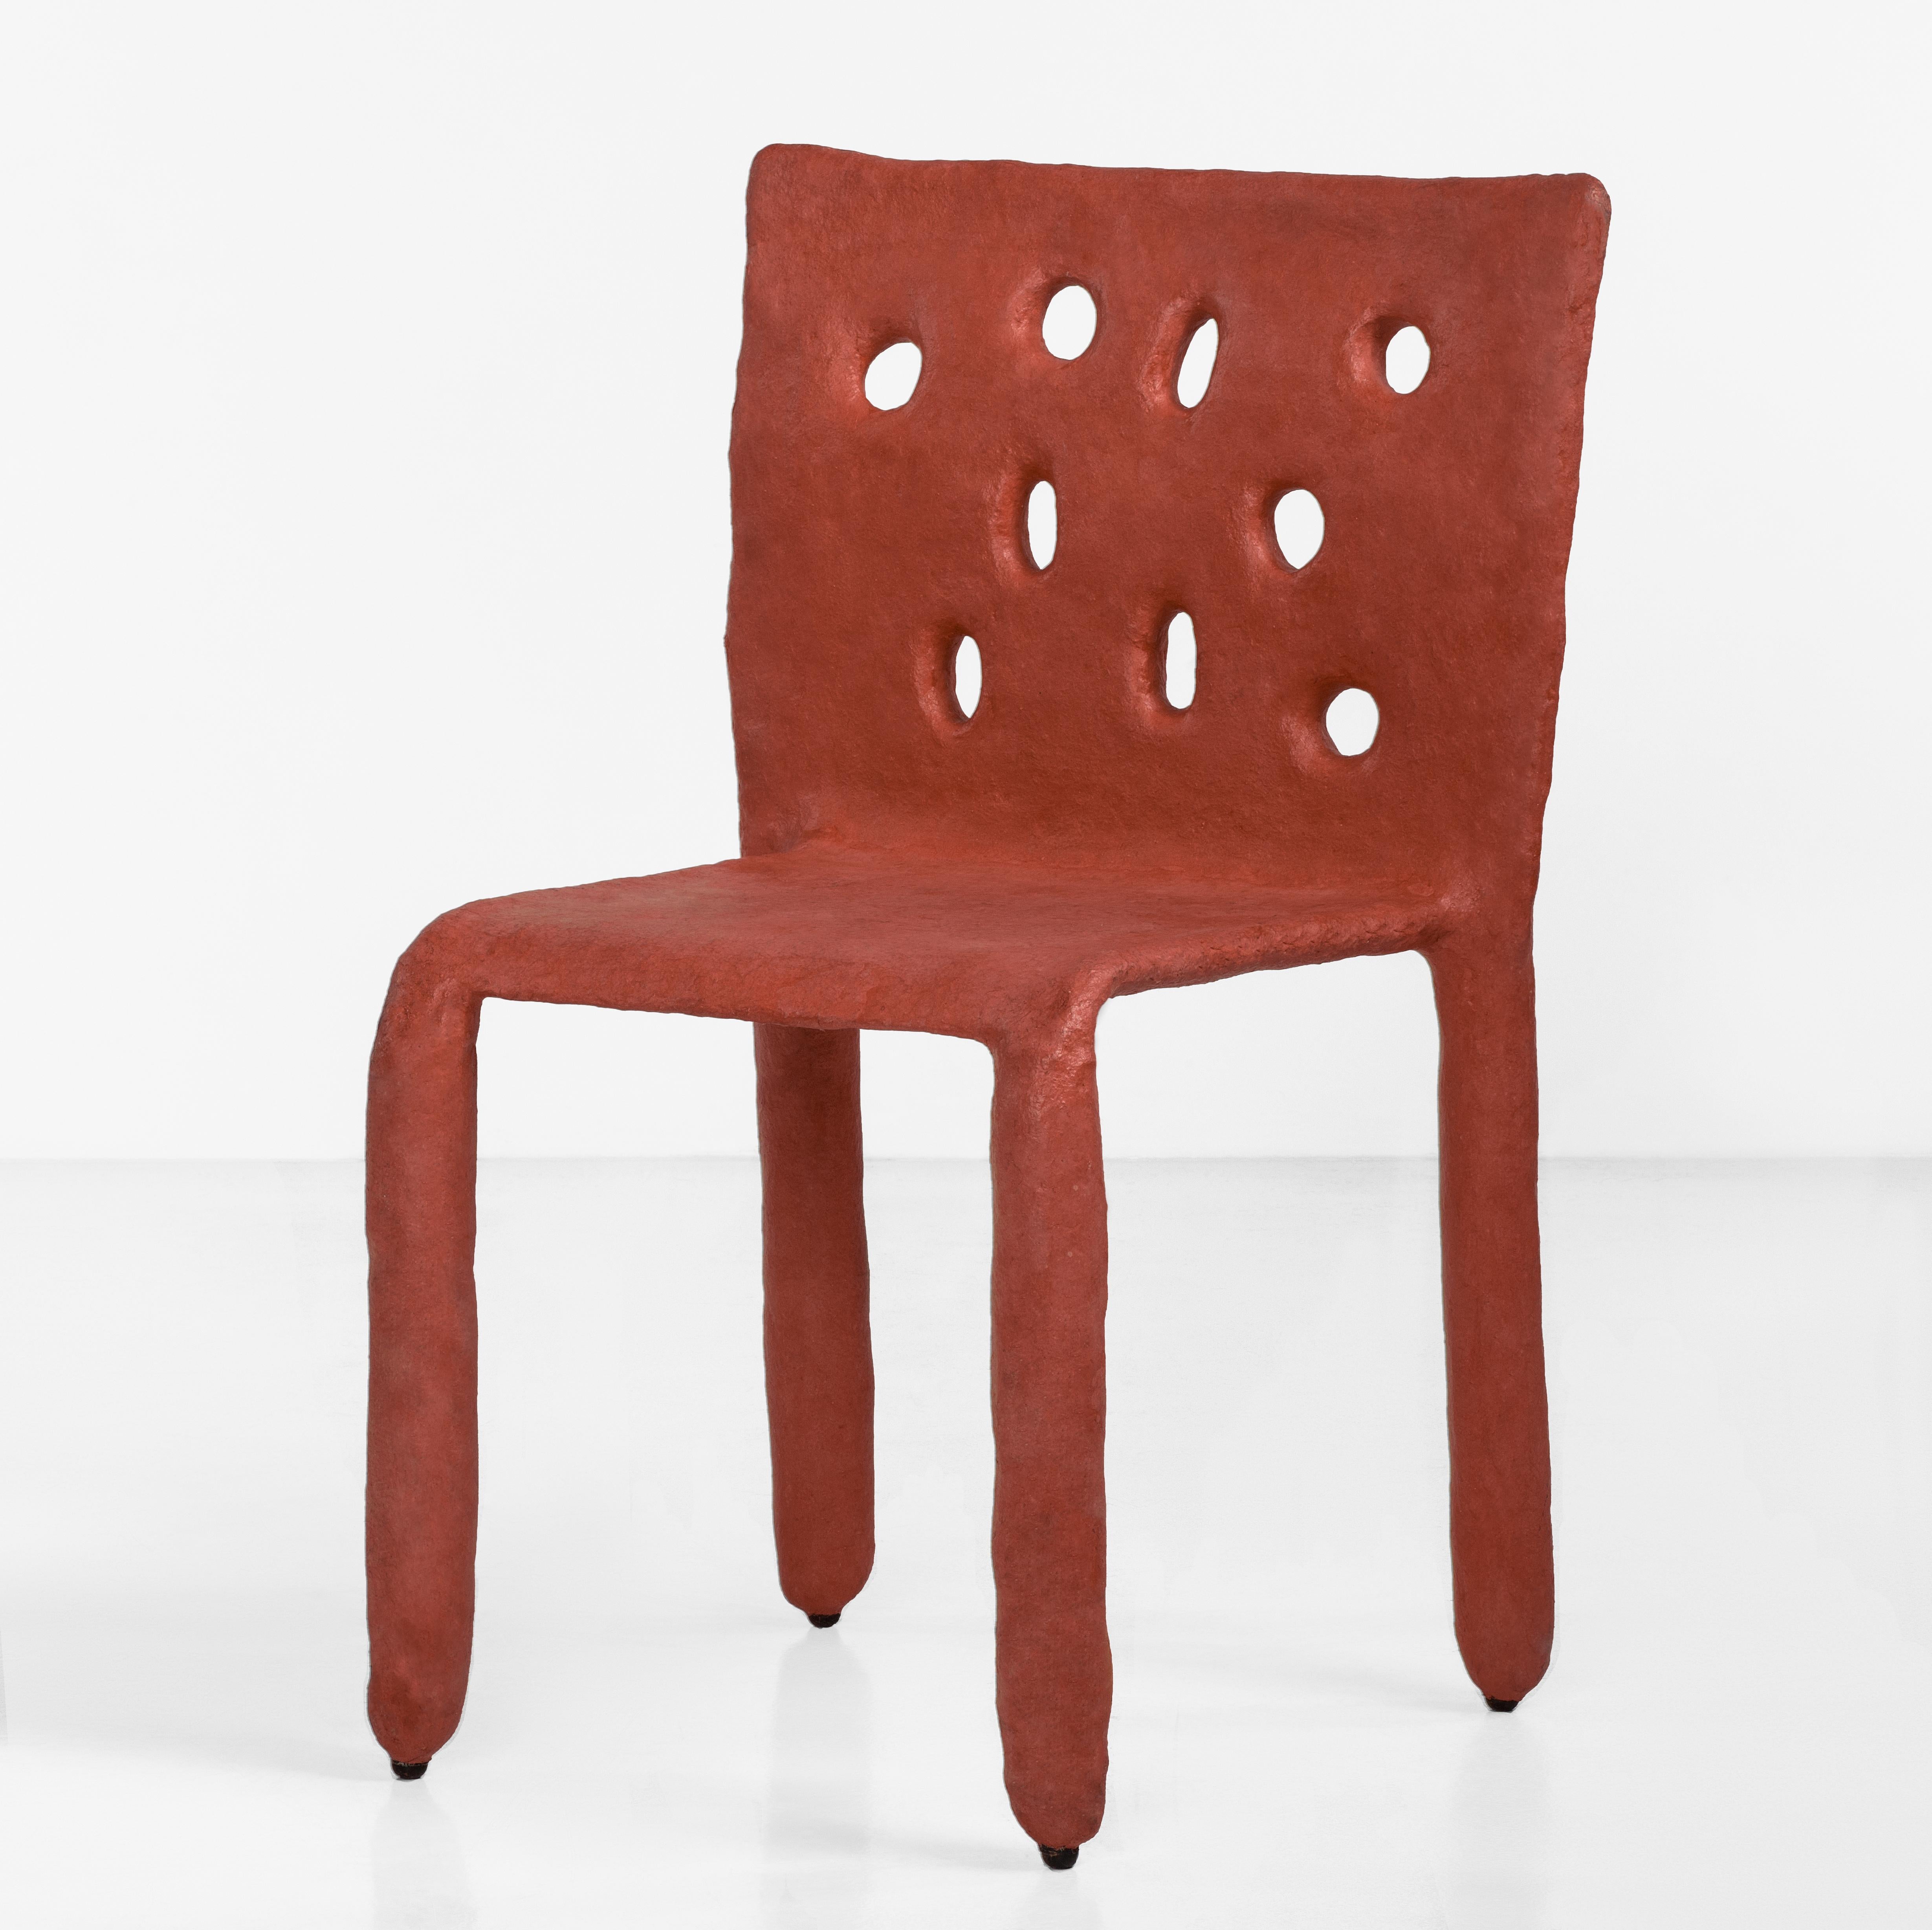 Blue Sculpted Contemporary Chair by FAINA 2